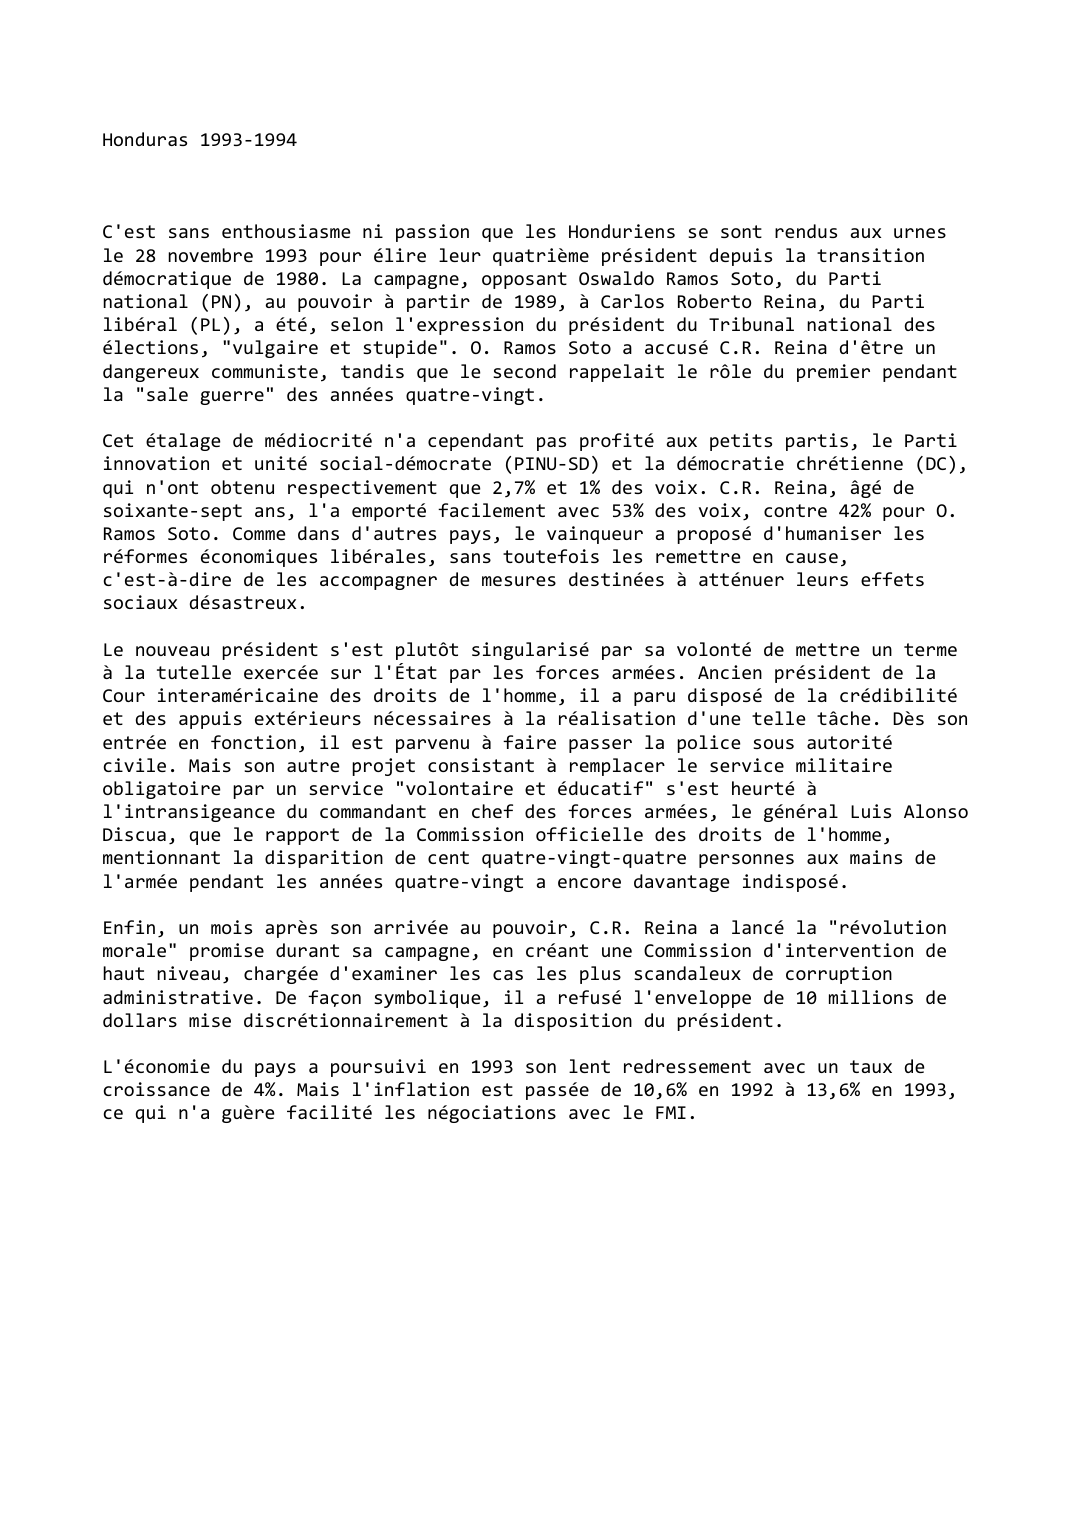 Prévisualisation du document Honduras (1993-1994)